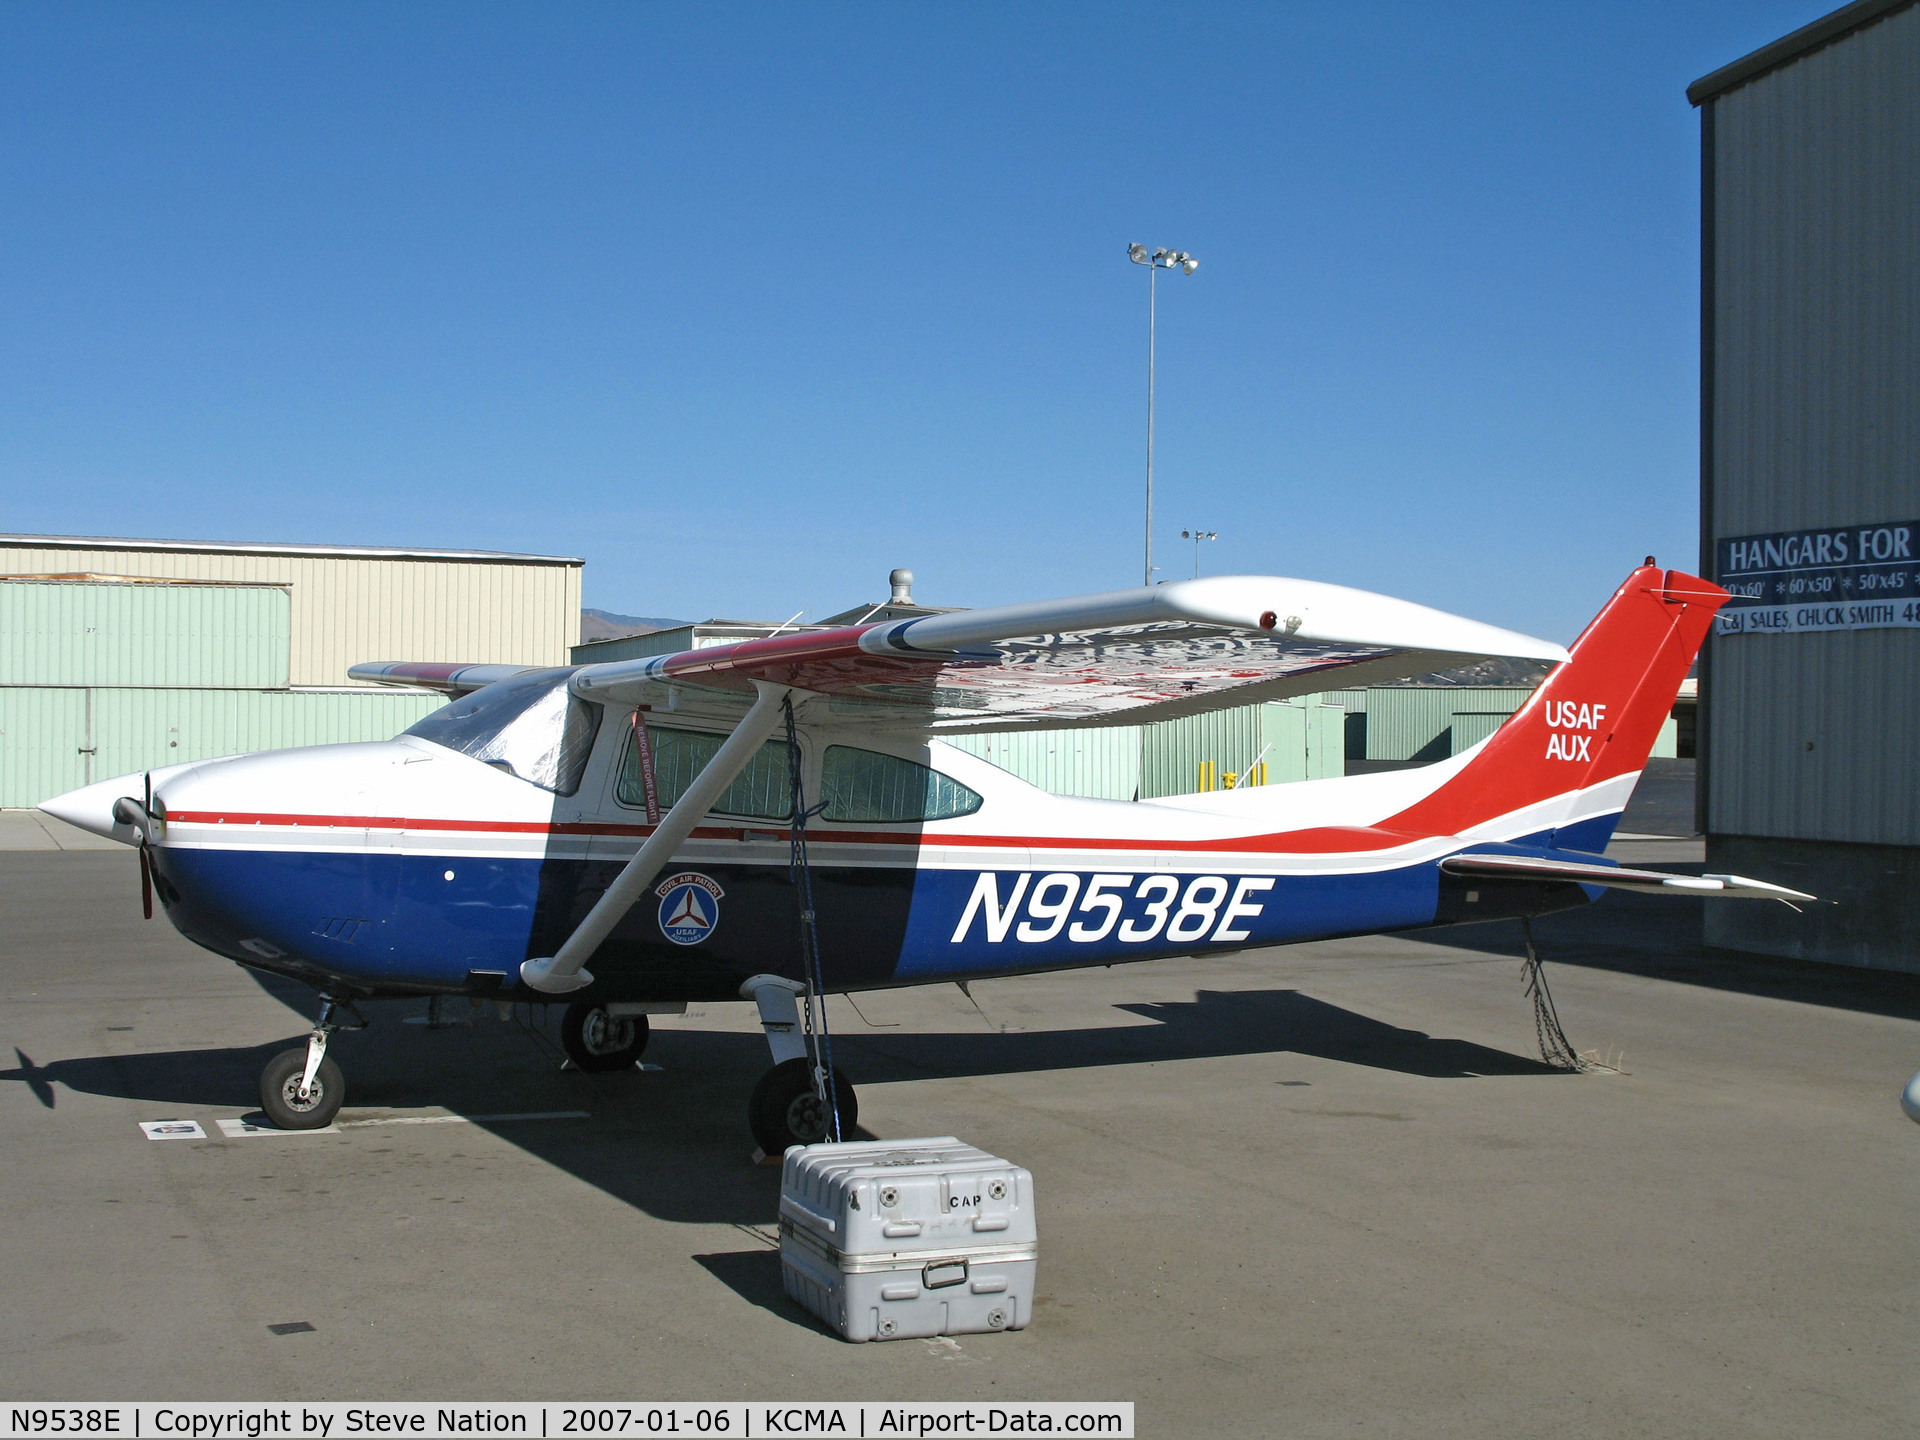 N9538E, 1984 Cessna 182R Skylane C/N 18268422, USAF AUX (Civil Air Patrol) 1984 Cessna 182R at Camarillo, CA home base on sunny January day